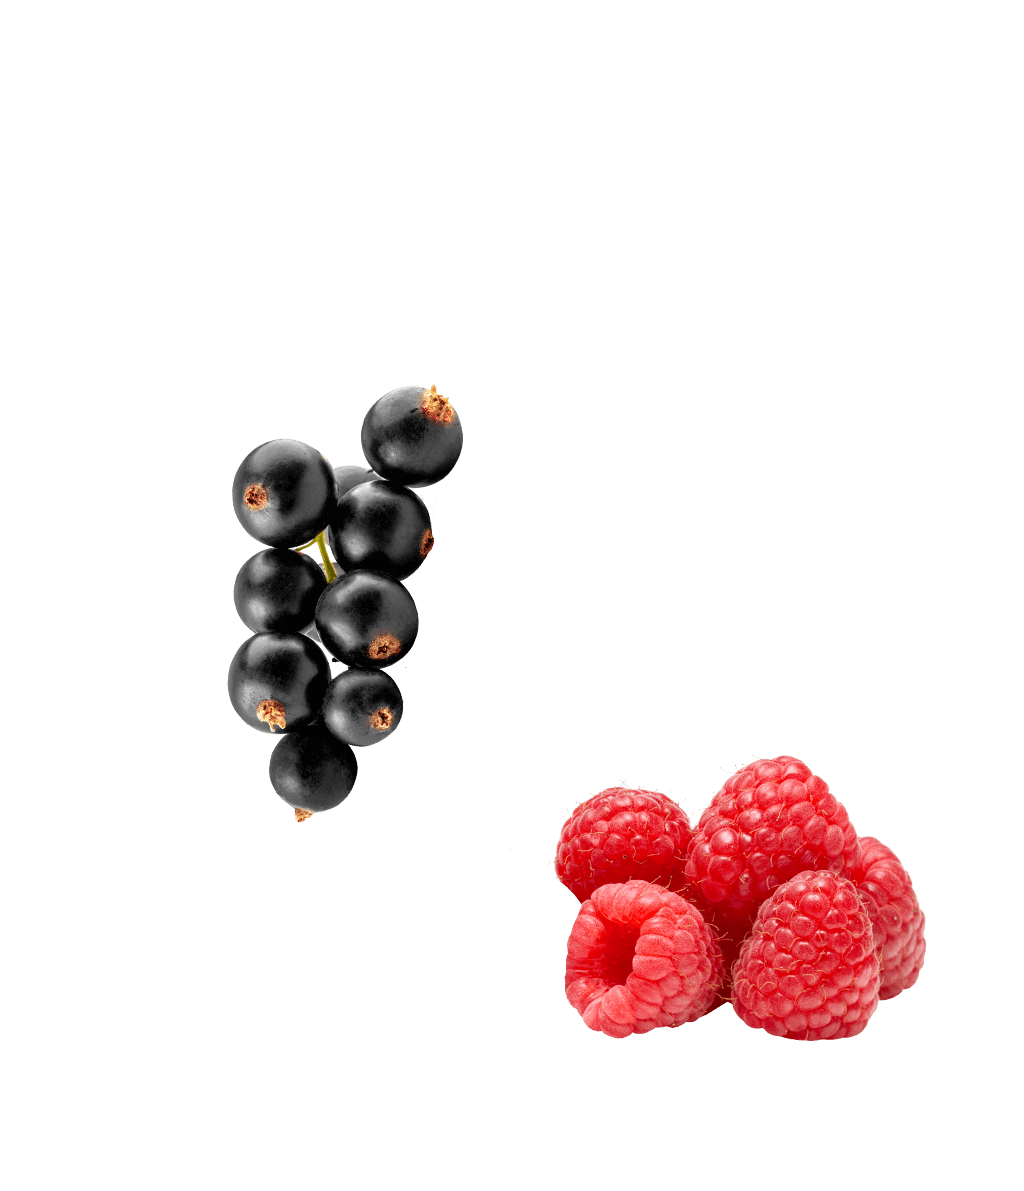 Raspberry Blackcurrant